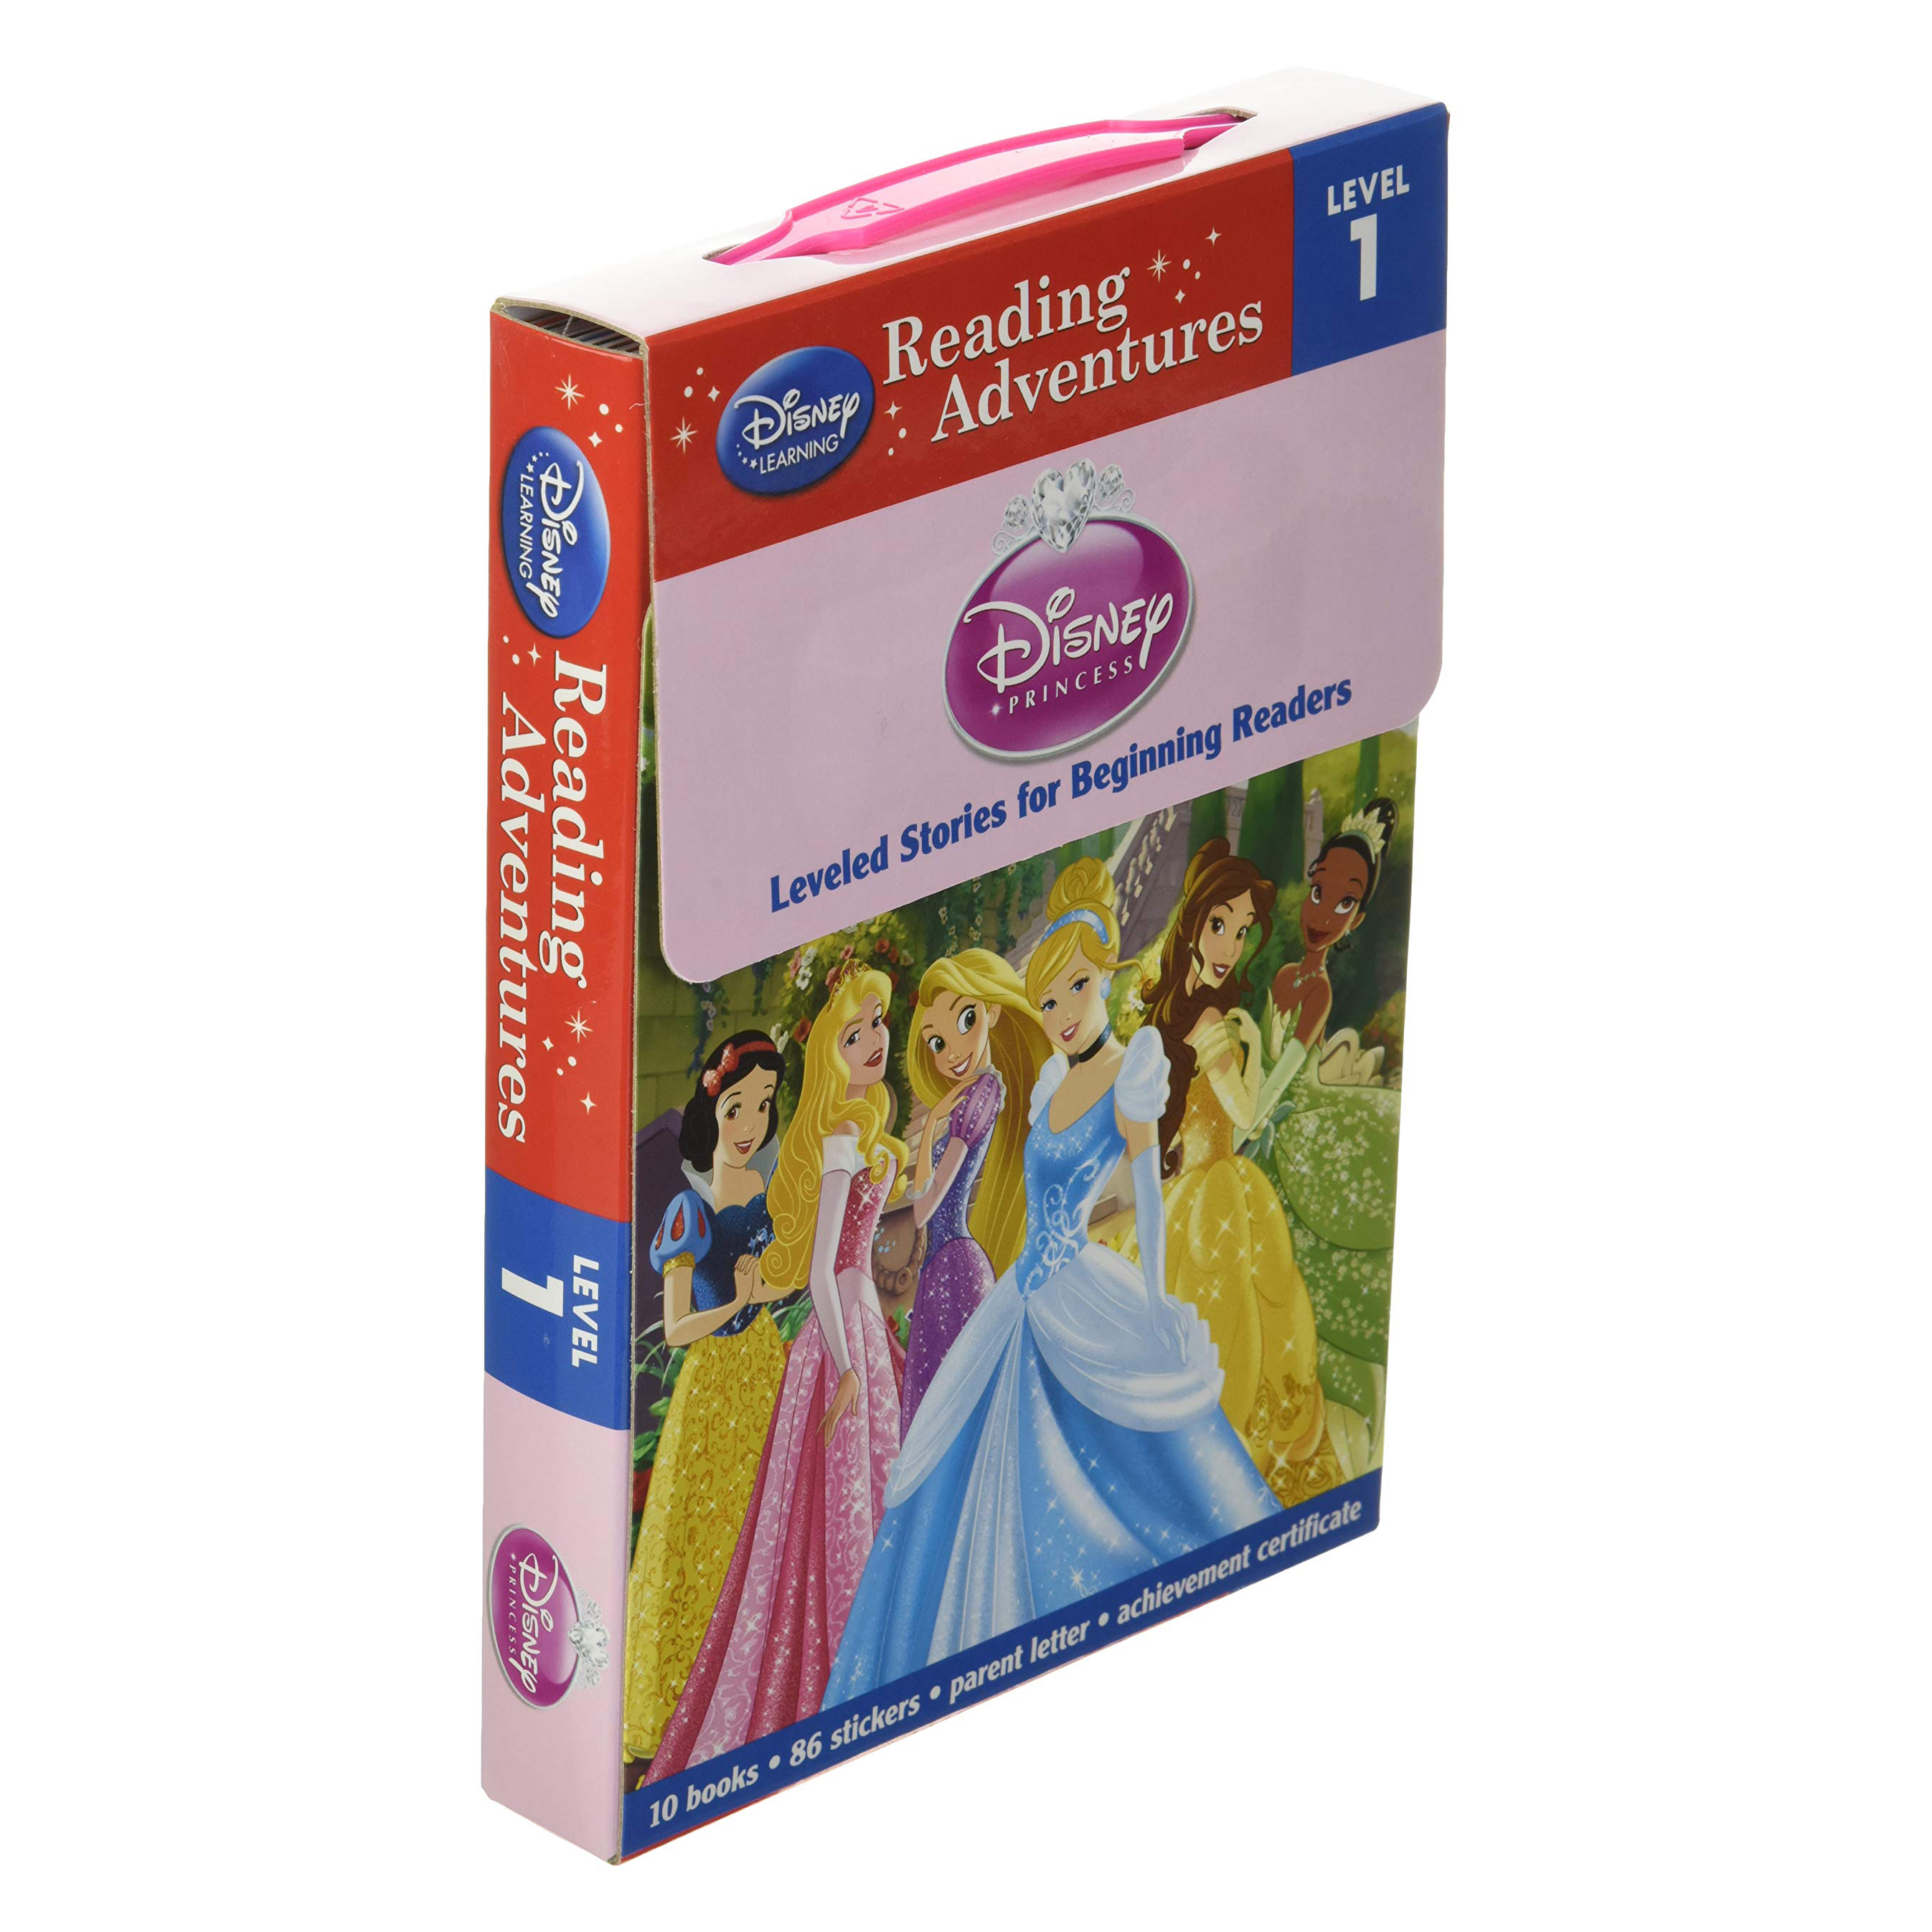 DisneyPrincess Reading Adventures DisneyPrincess Level 1 Boxed Set